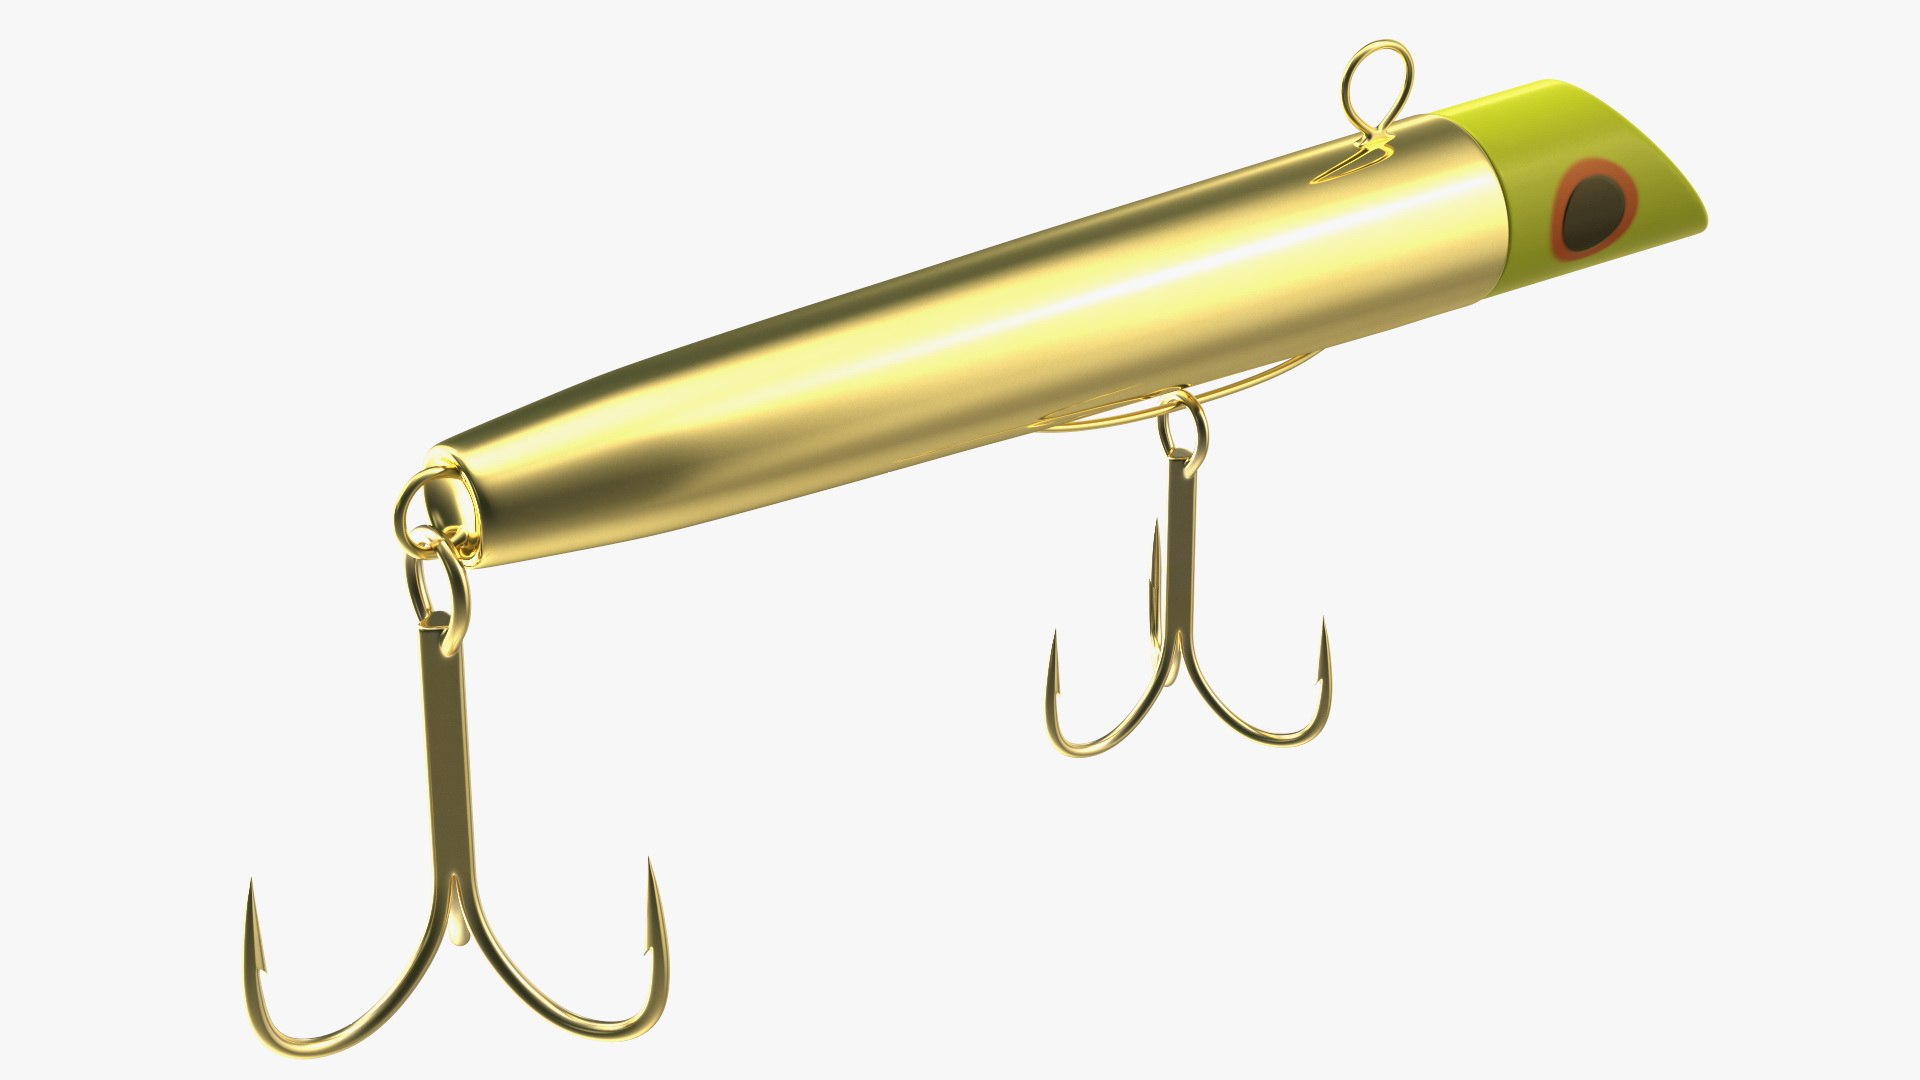 3D Gotcha Metal Gold Body Fishing Lure - TurboSquid 1827193